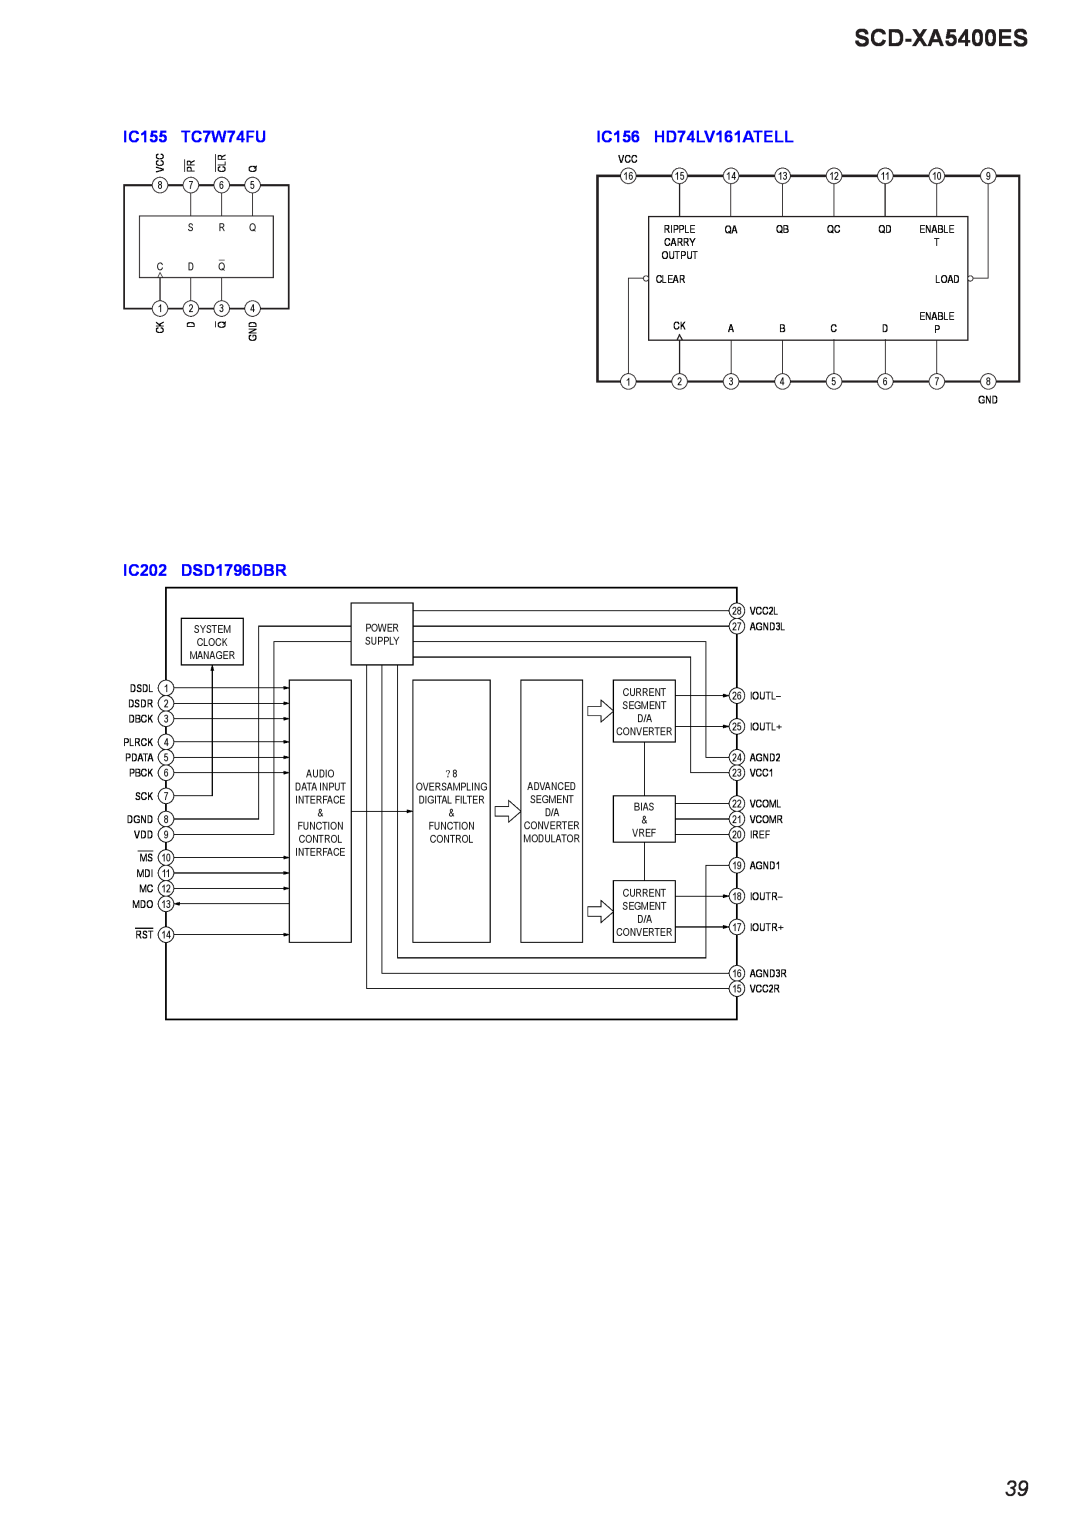 Sony 2008H05-1 service manual SCD-XA5400ES, IC155, TC7W74FU, IC156, HD74LV161ATELL, IC202, DSD1796DBR 